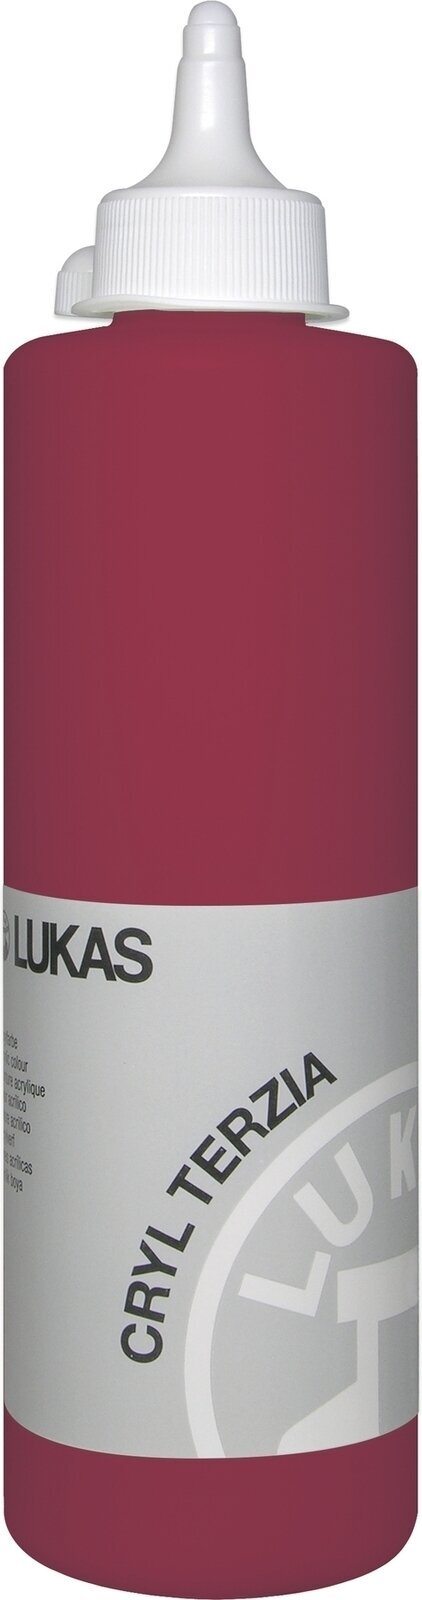 Акрилна боя Lukas Cryl Terzia Acrylic Paint Plastic Bottle АКРИЛНА боя Alizarin Crimson 500 ml 1 бр